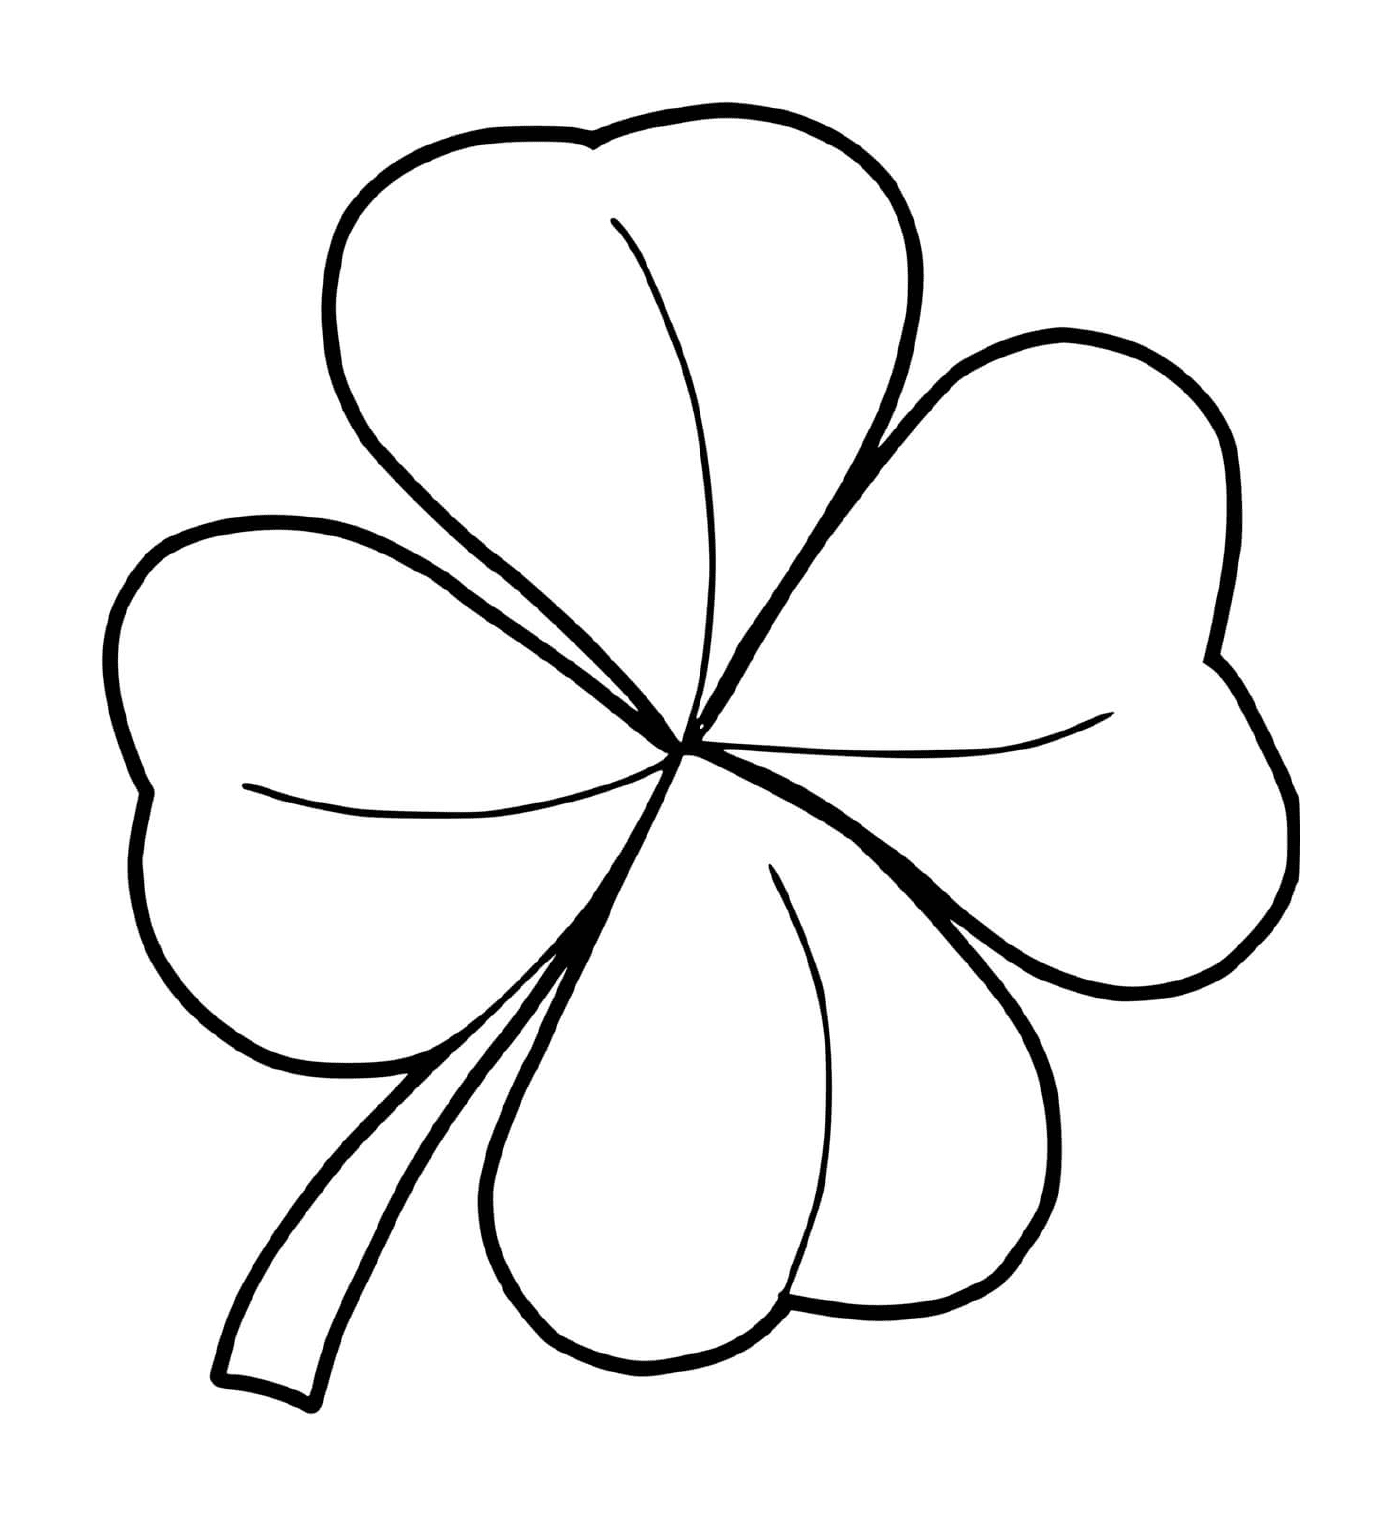  Four-leaf clover 